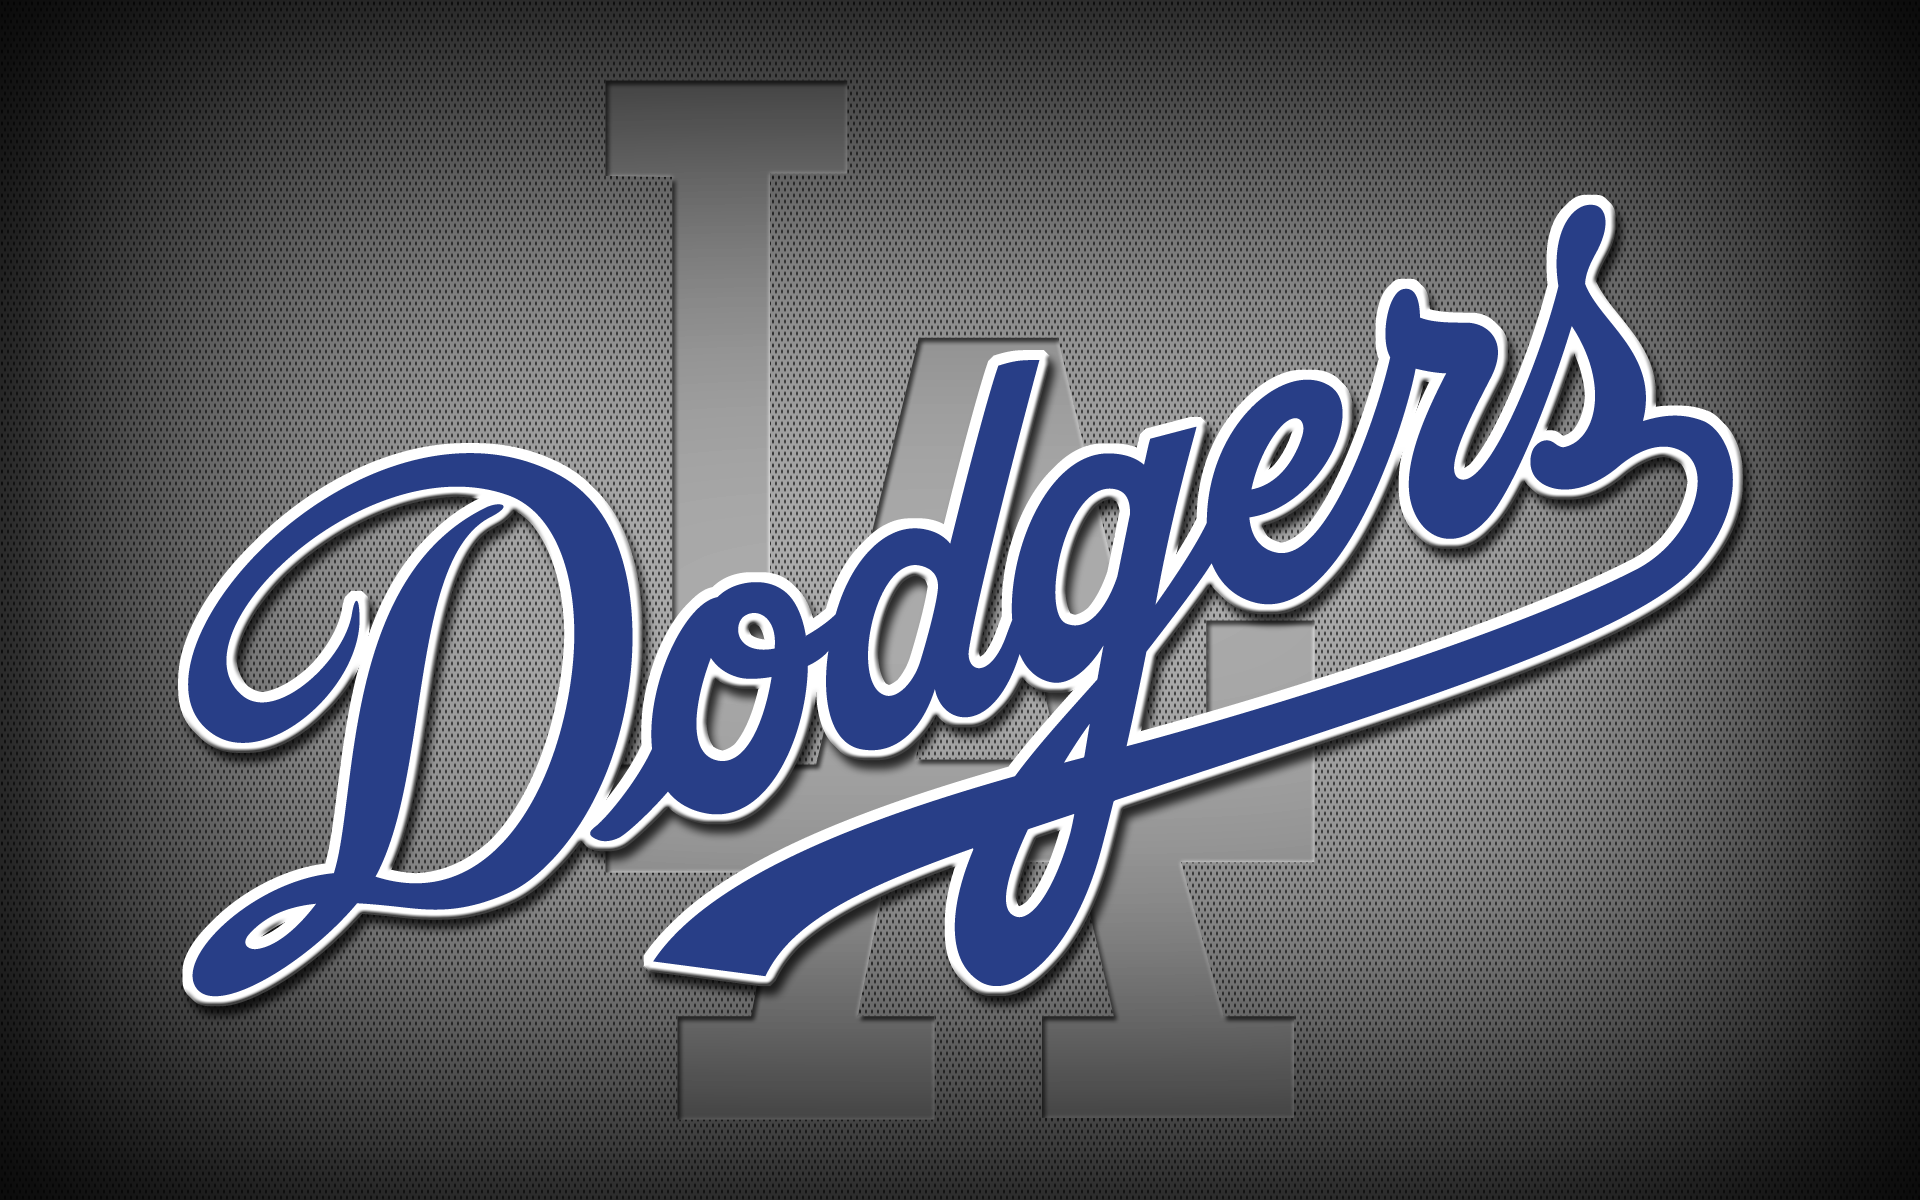 Angeles Dodgers Wallpaper Los Background